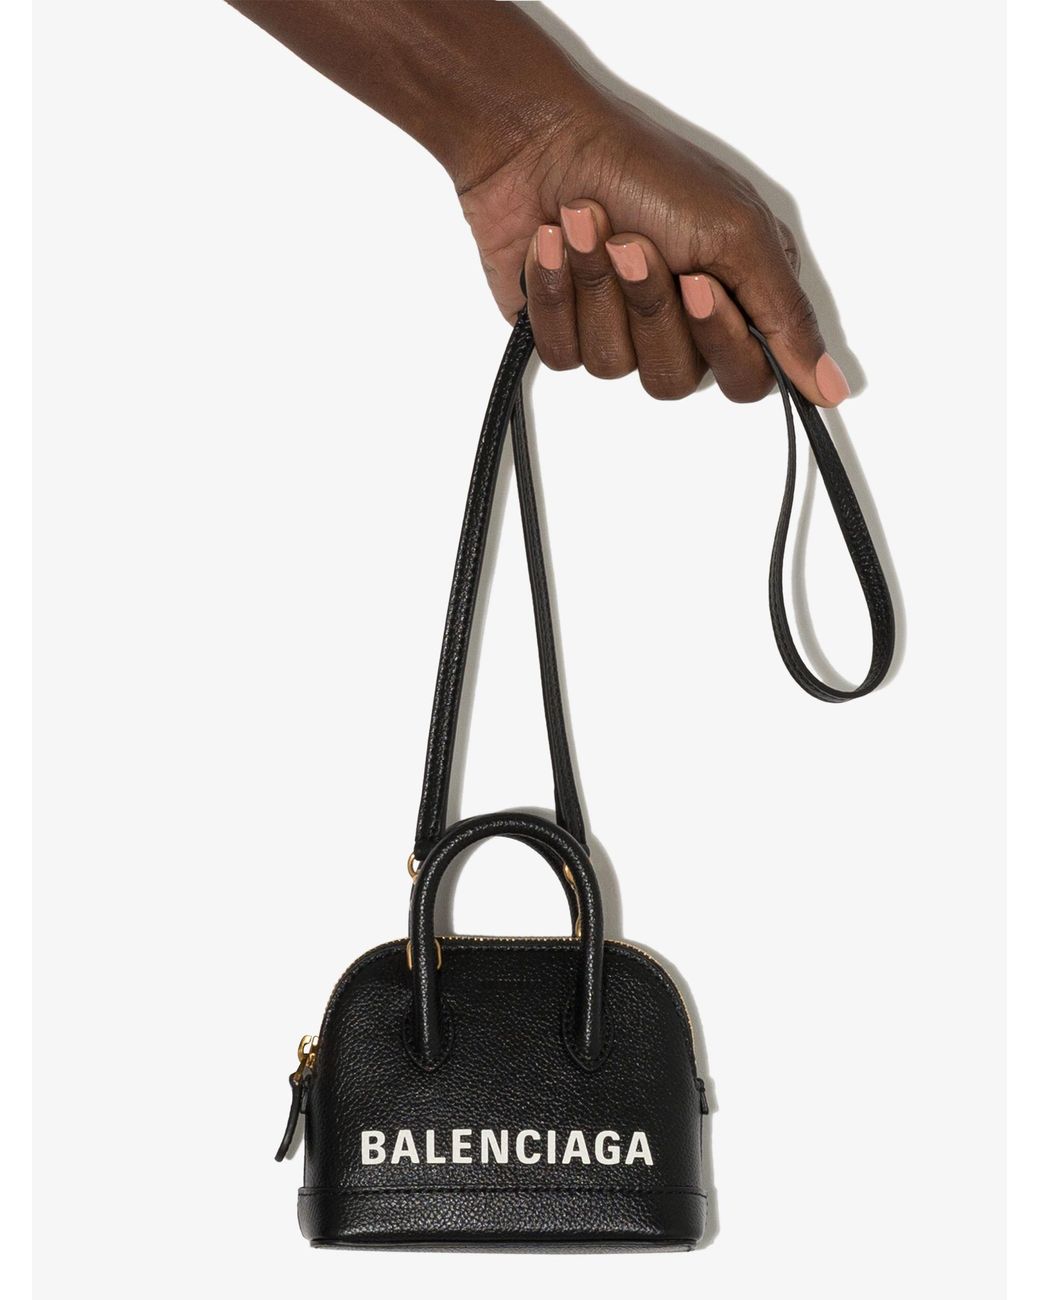 Balenciaga Ville Xxs Leather Top Handle Bag in Black | Lyst